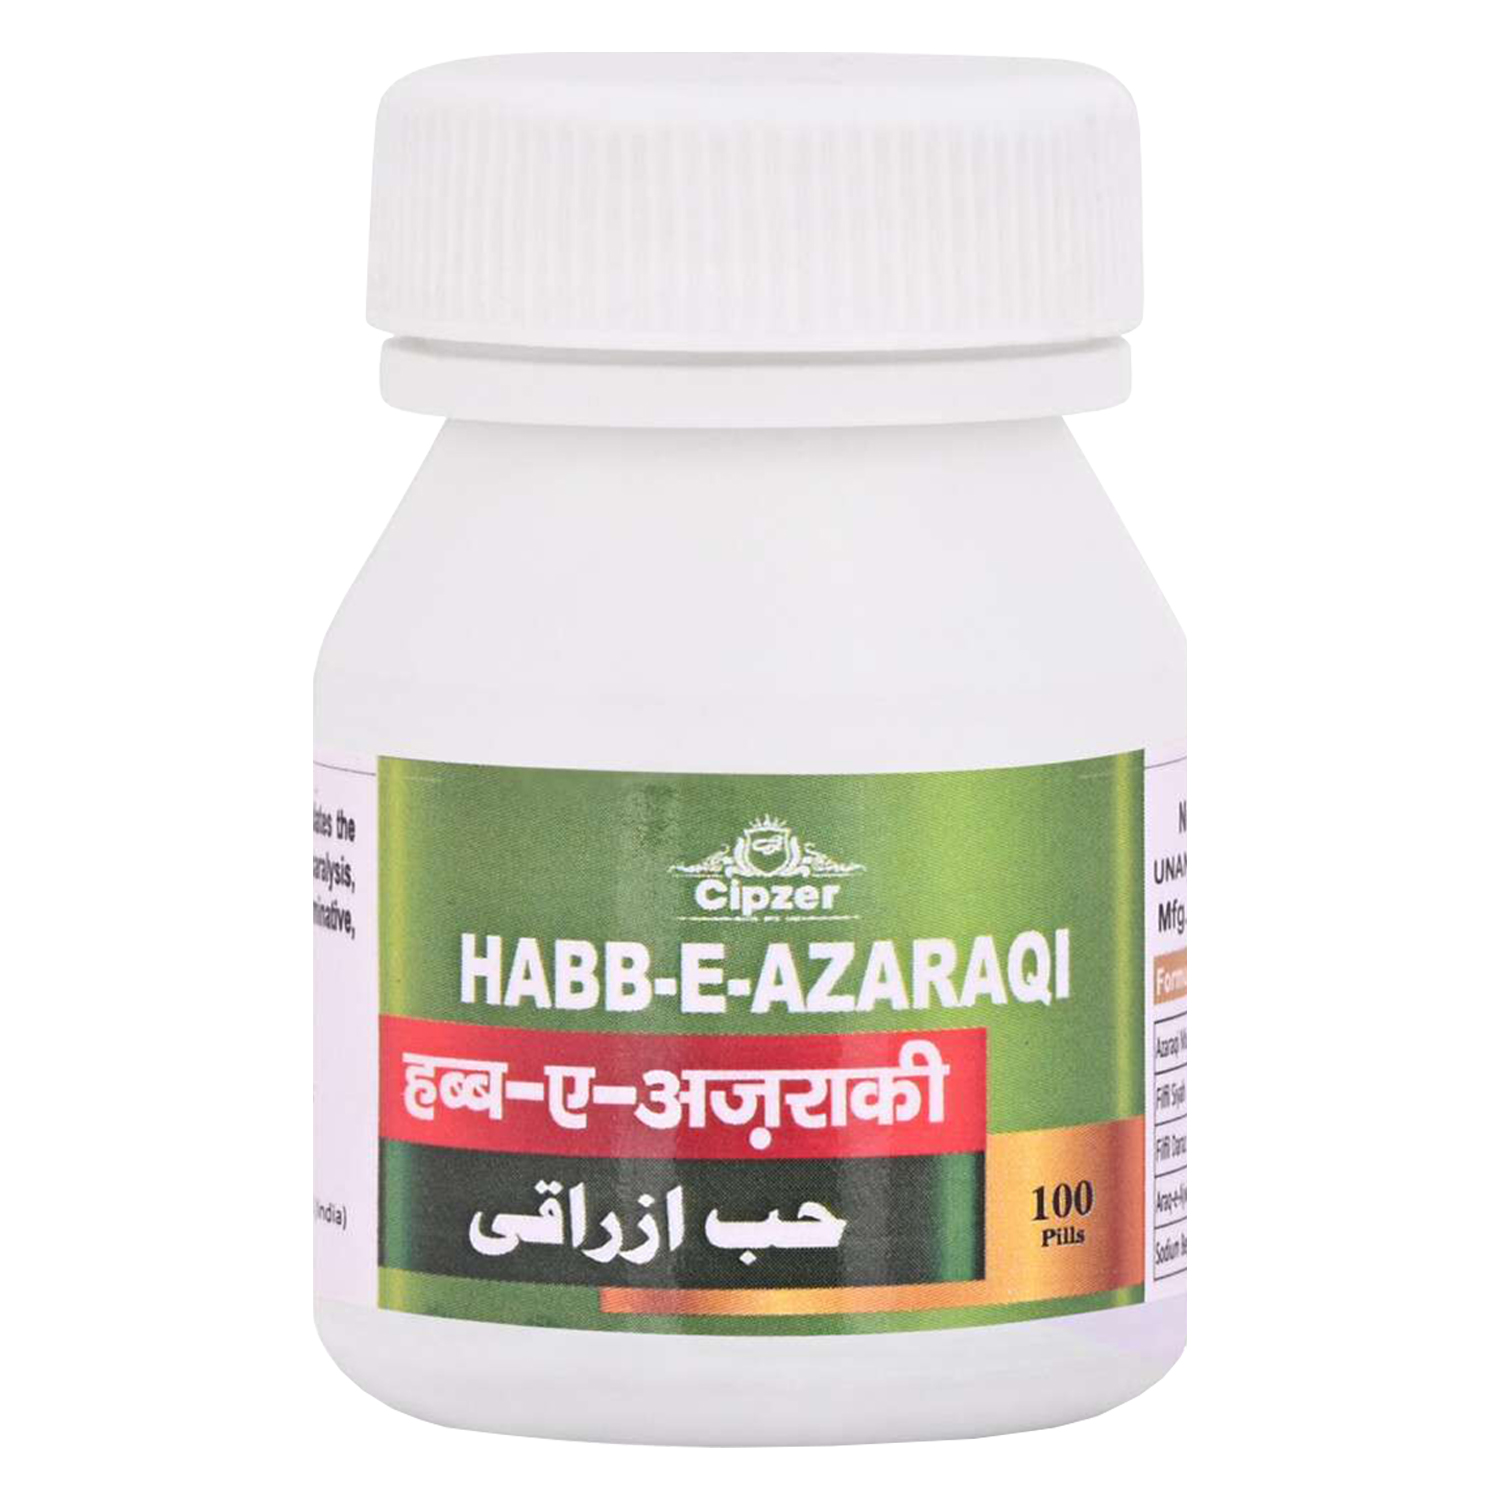 Buy Cipzer Habbe Azaraqi at Best Price Online